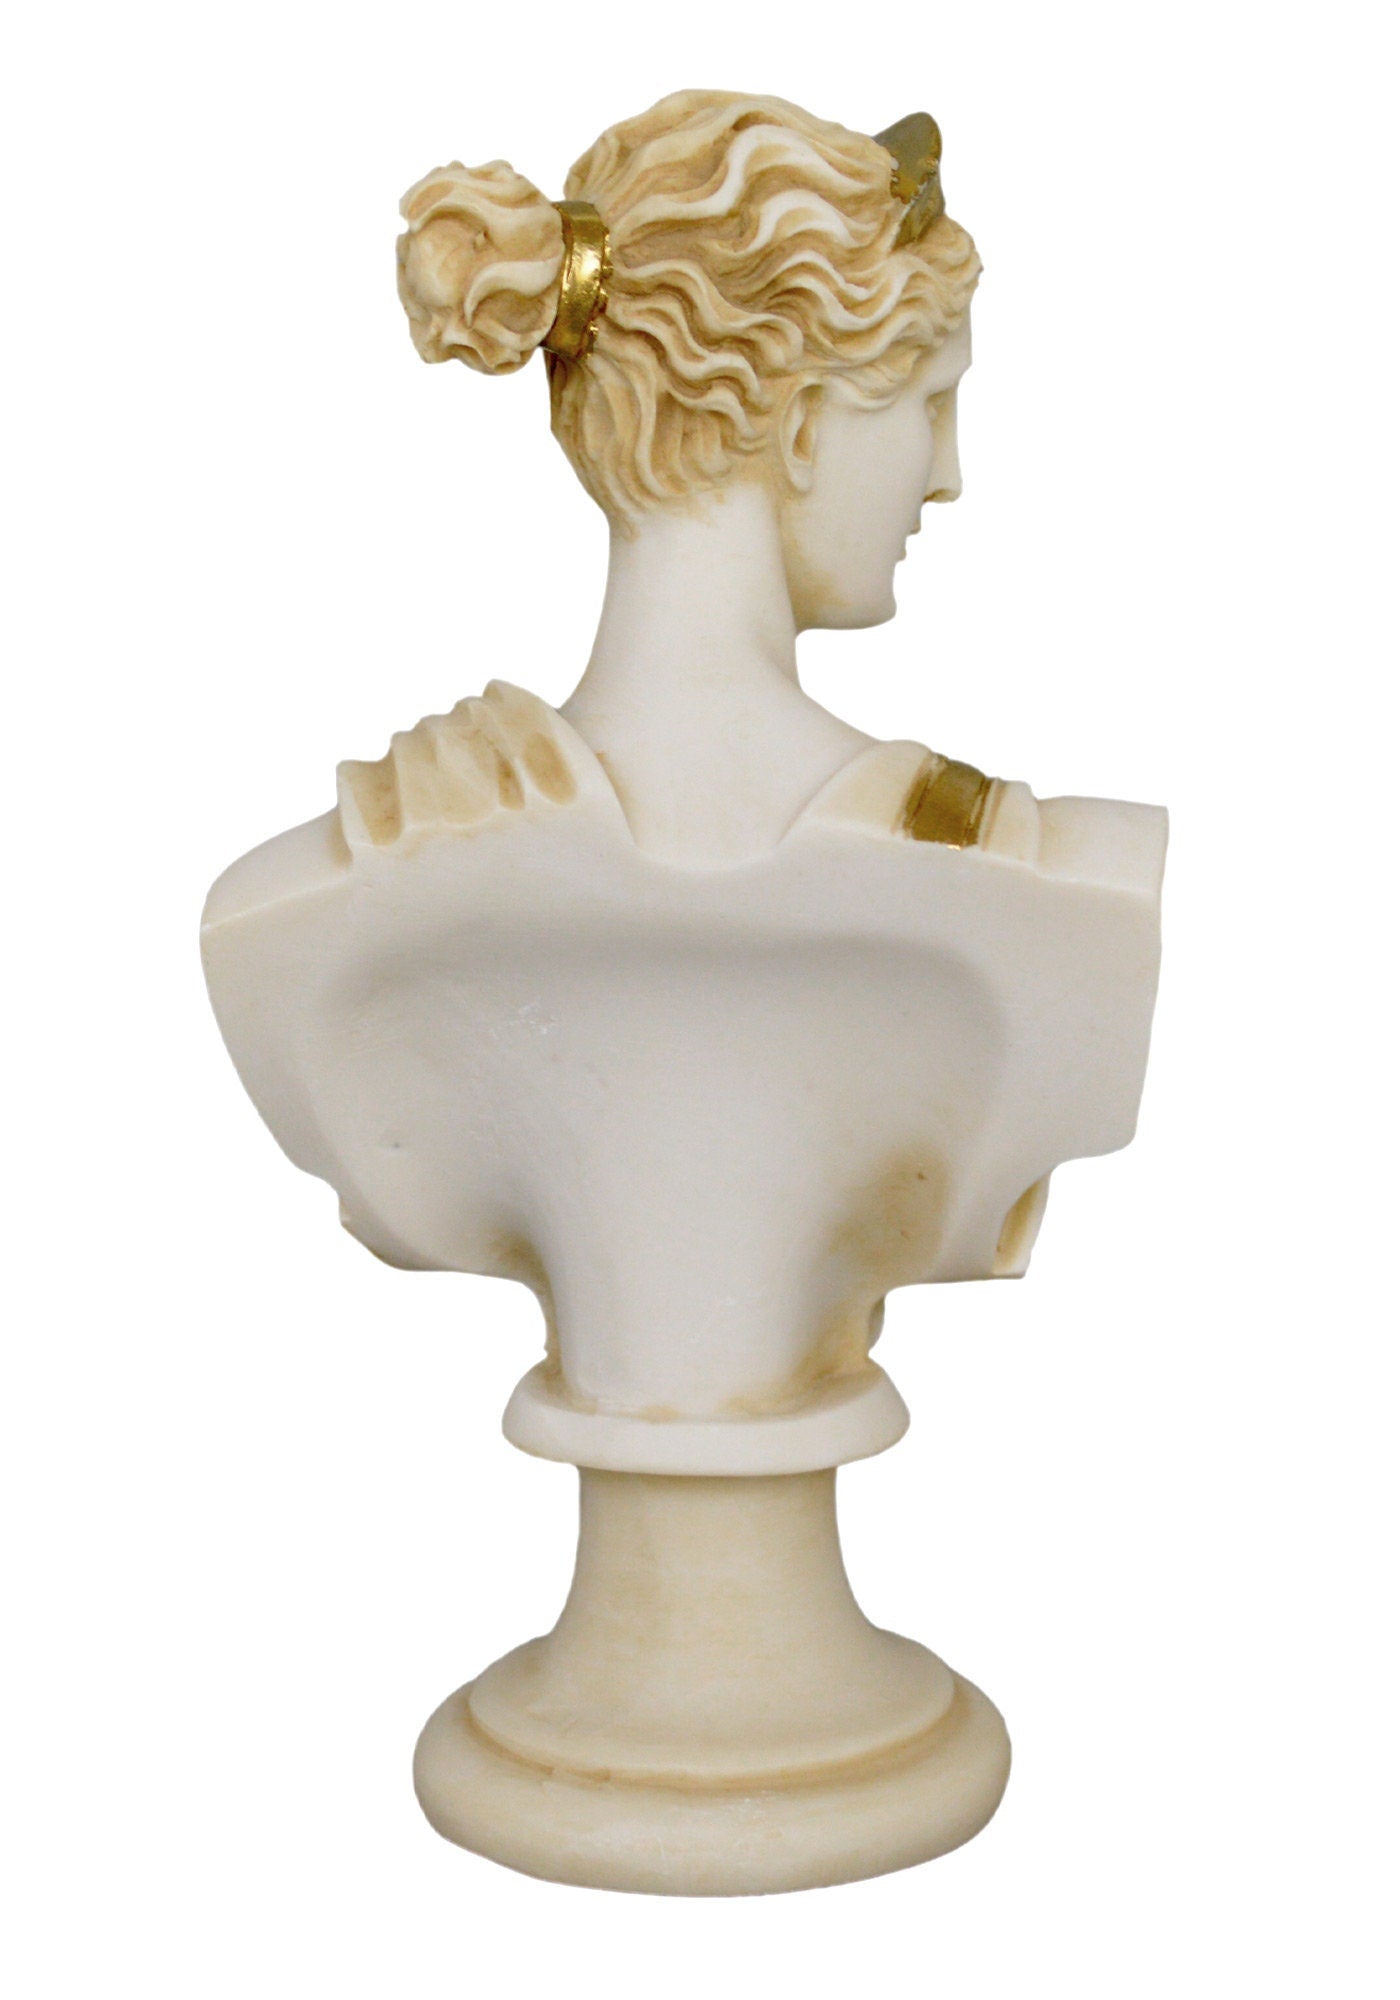 Artemis Diana - Greek Roman goddess of Hunt, protector of Girls  - Small Aged Alabaster Bust